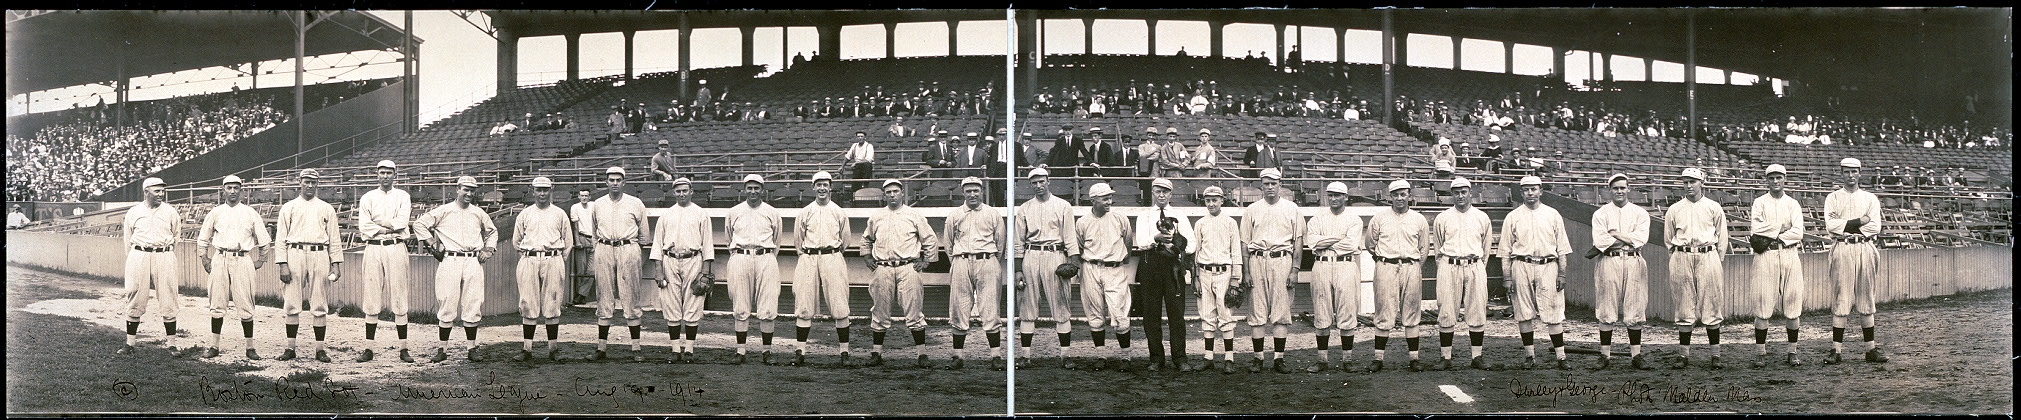 Boston Red Sox, American League, Aug. 19, 1914